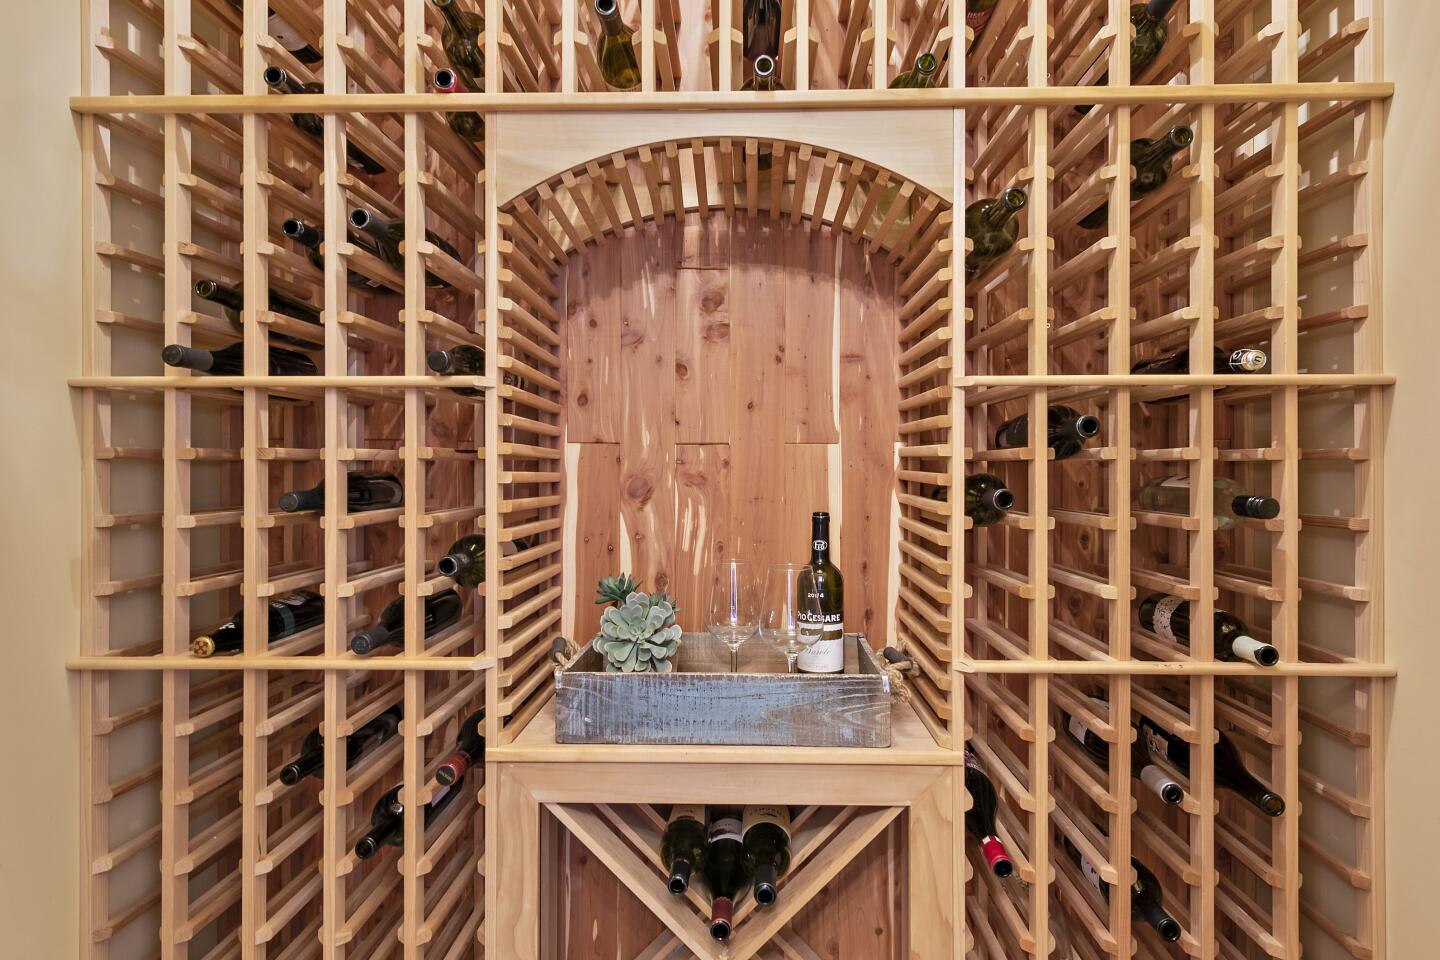 The wine storage.